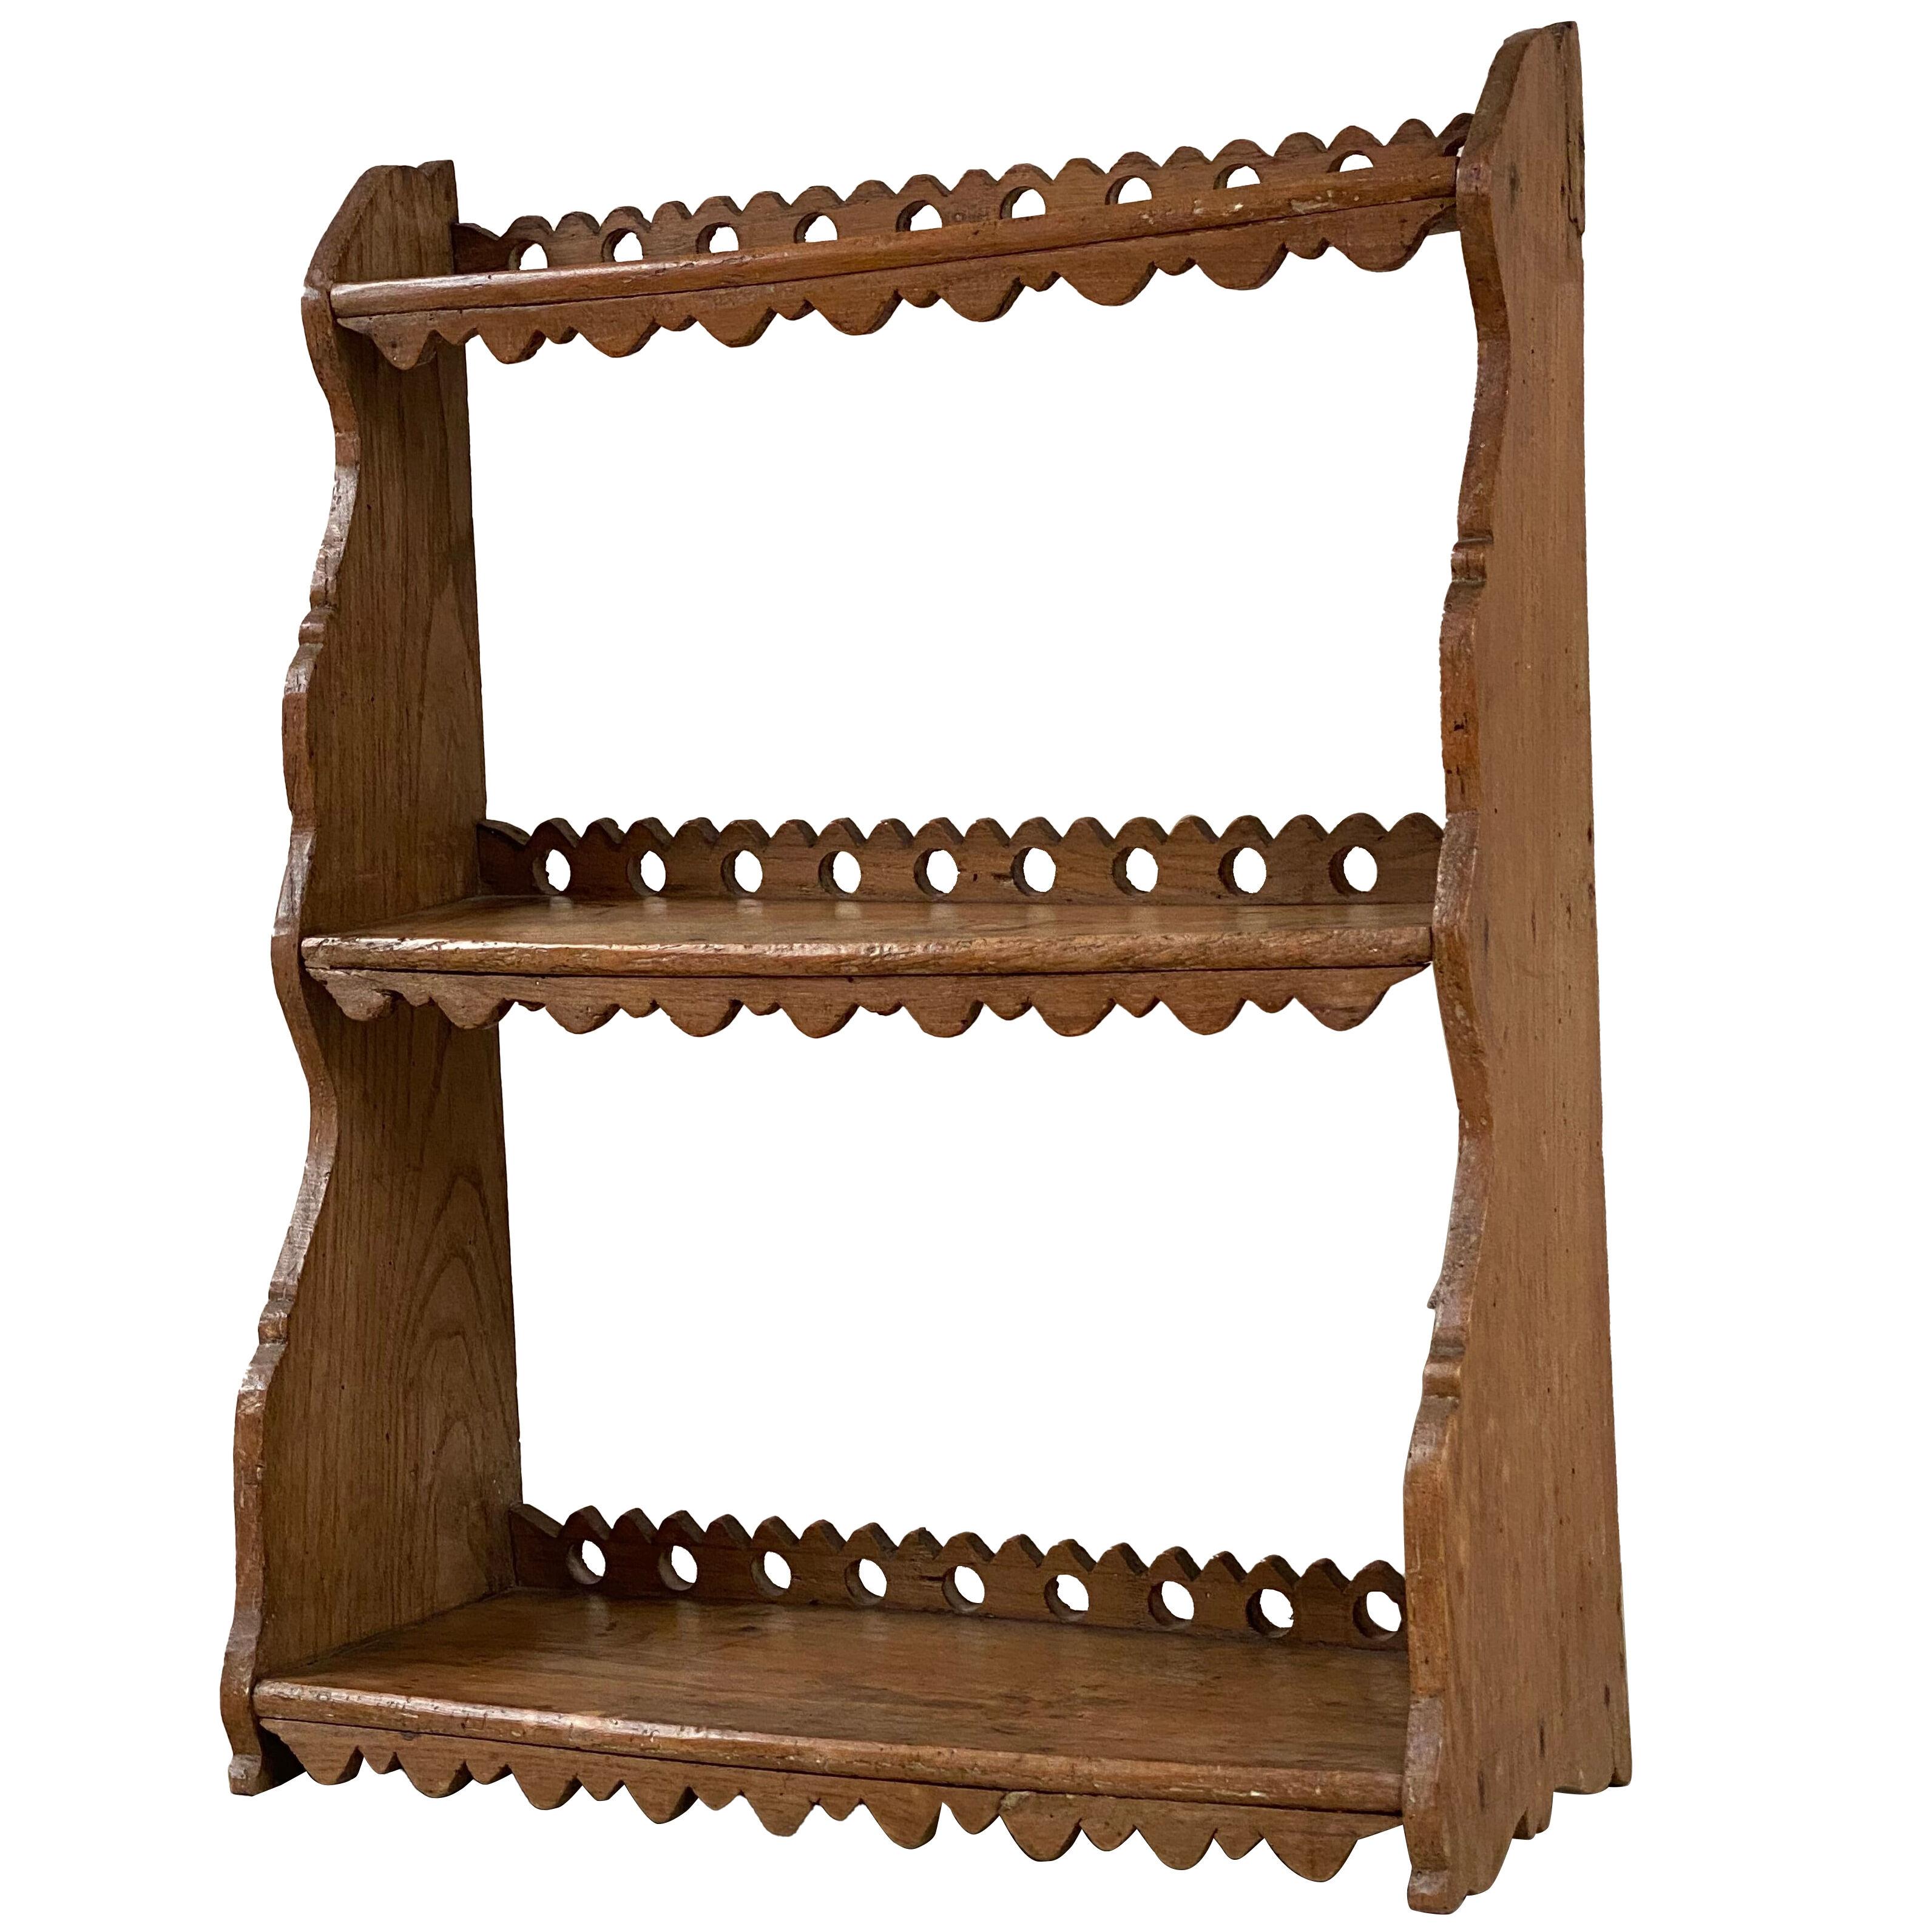 Antique English Wooden Rack